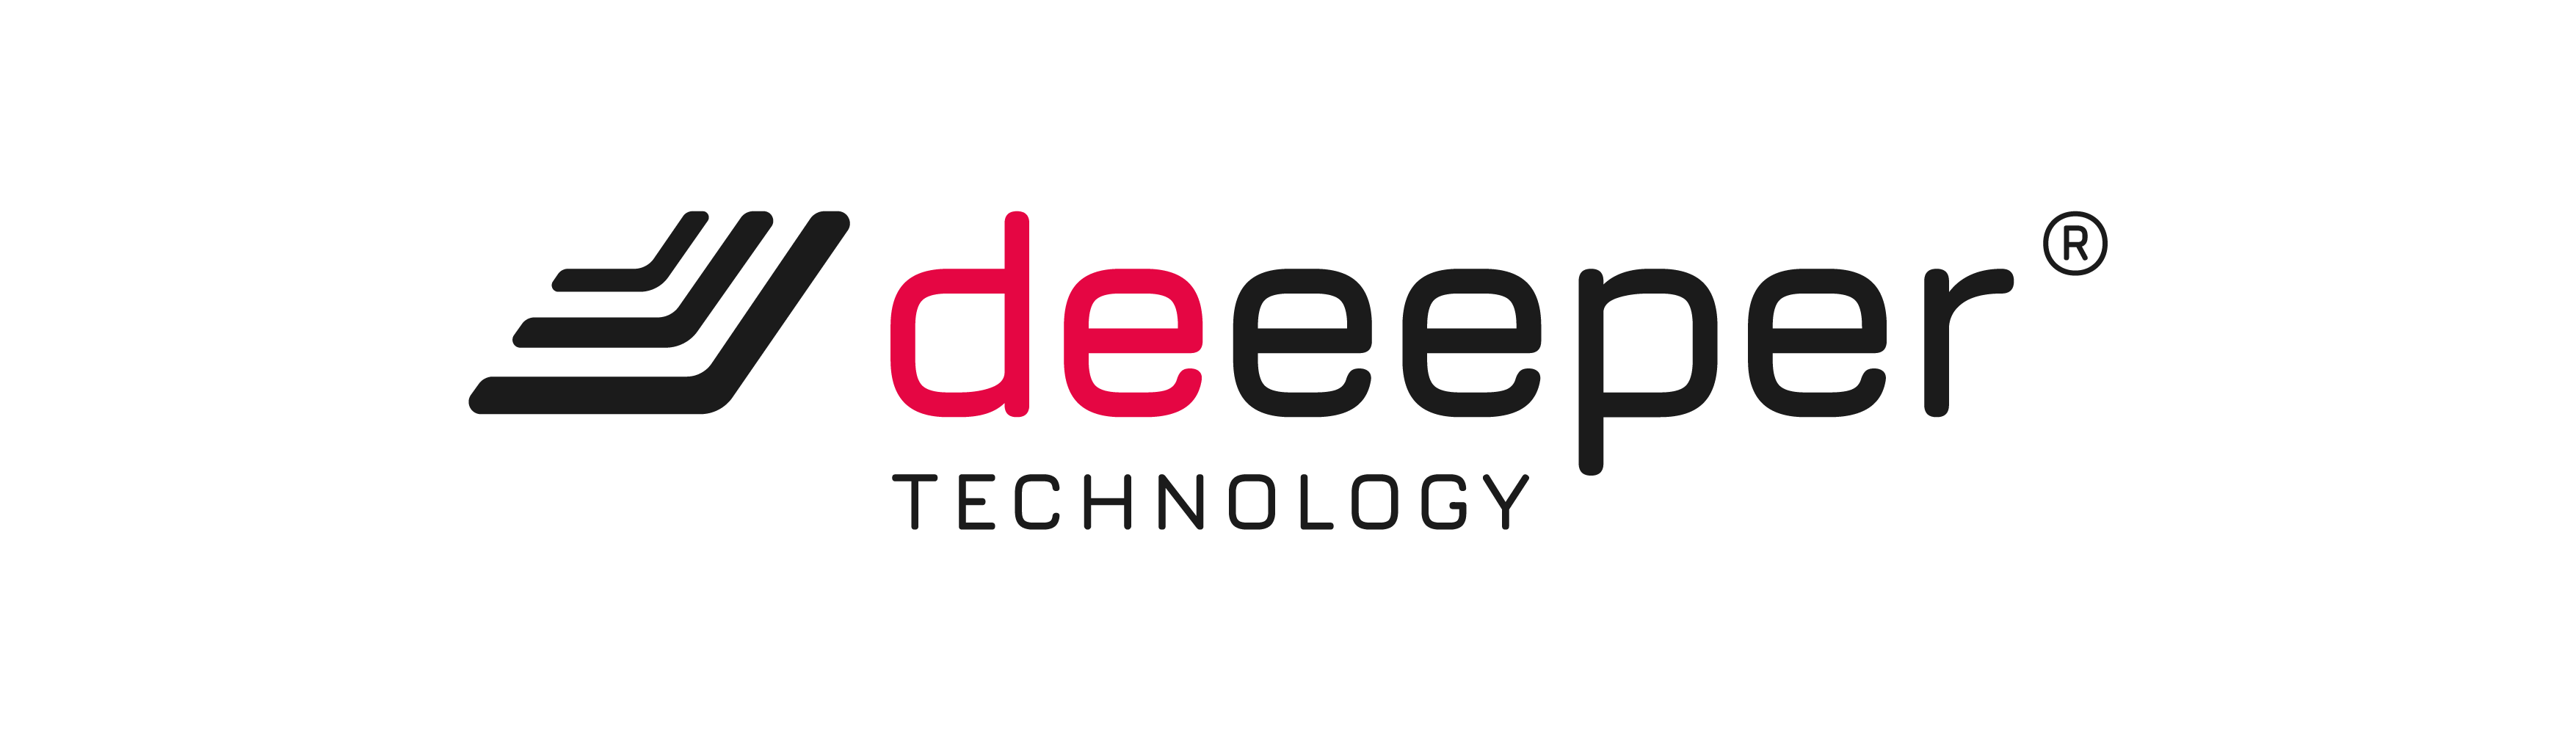 deeeper-maps-login